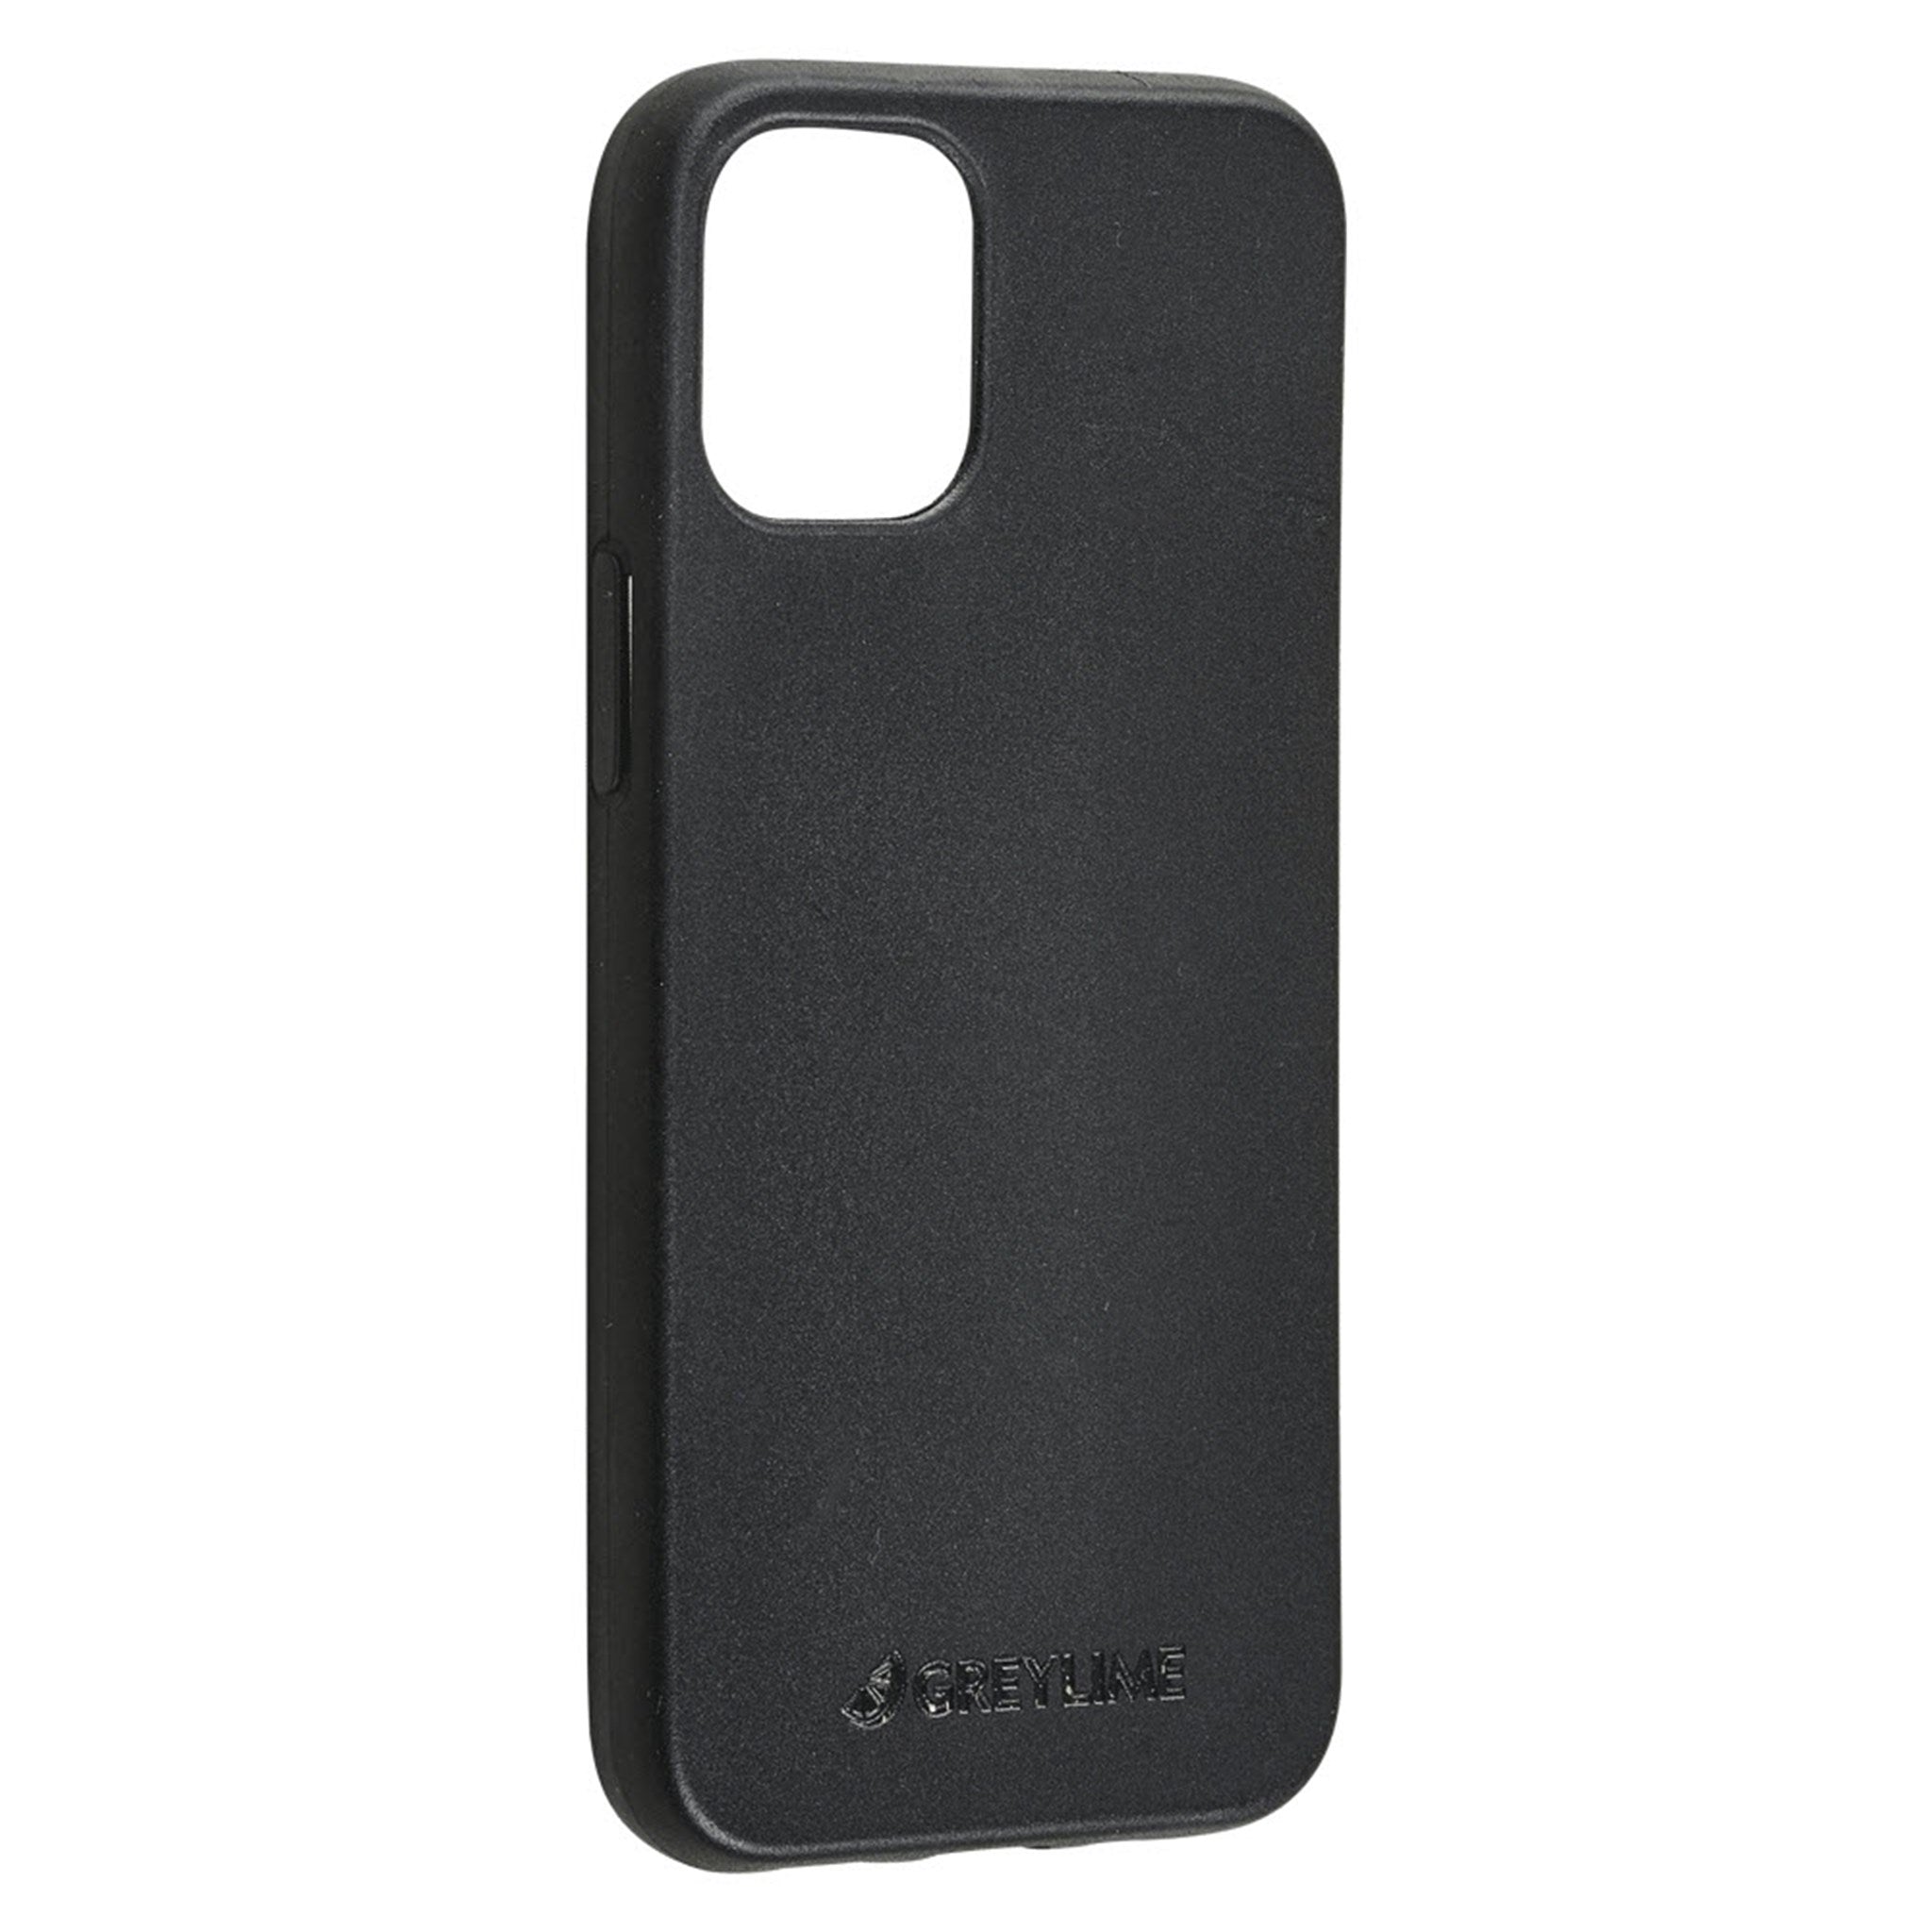 GreyLime-iPhone-12-Mini-Biodegdrable-Cover-Black-COIP12S01-V1.jpg